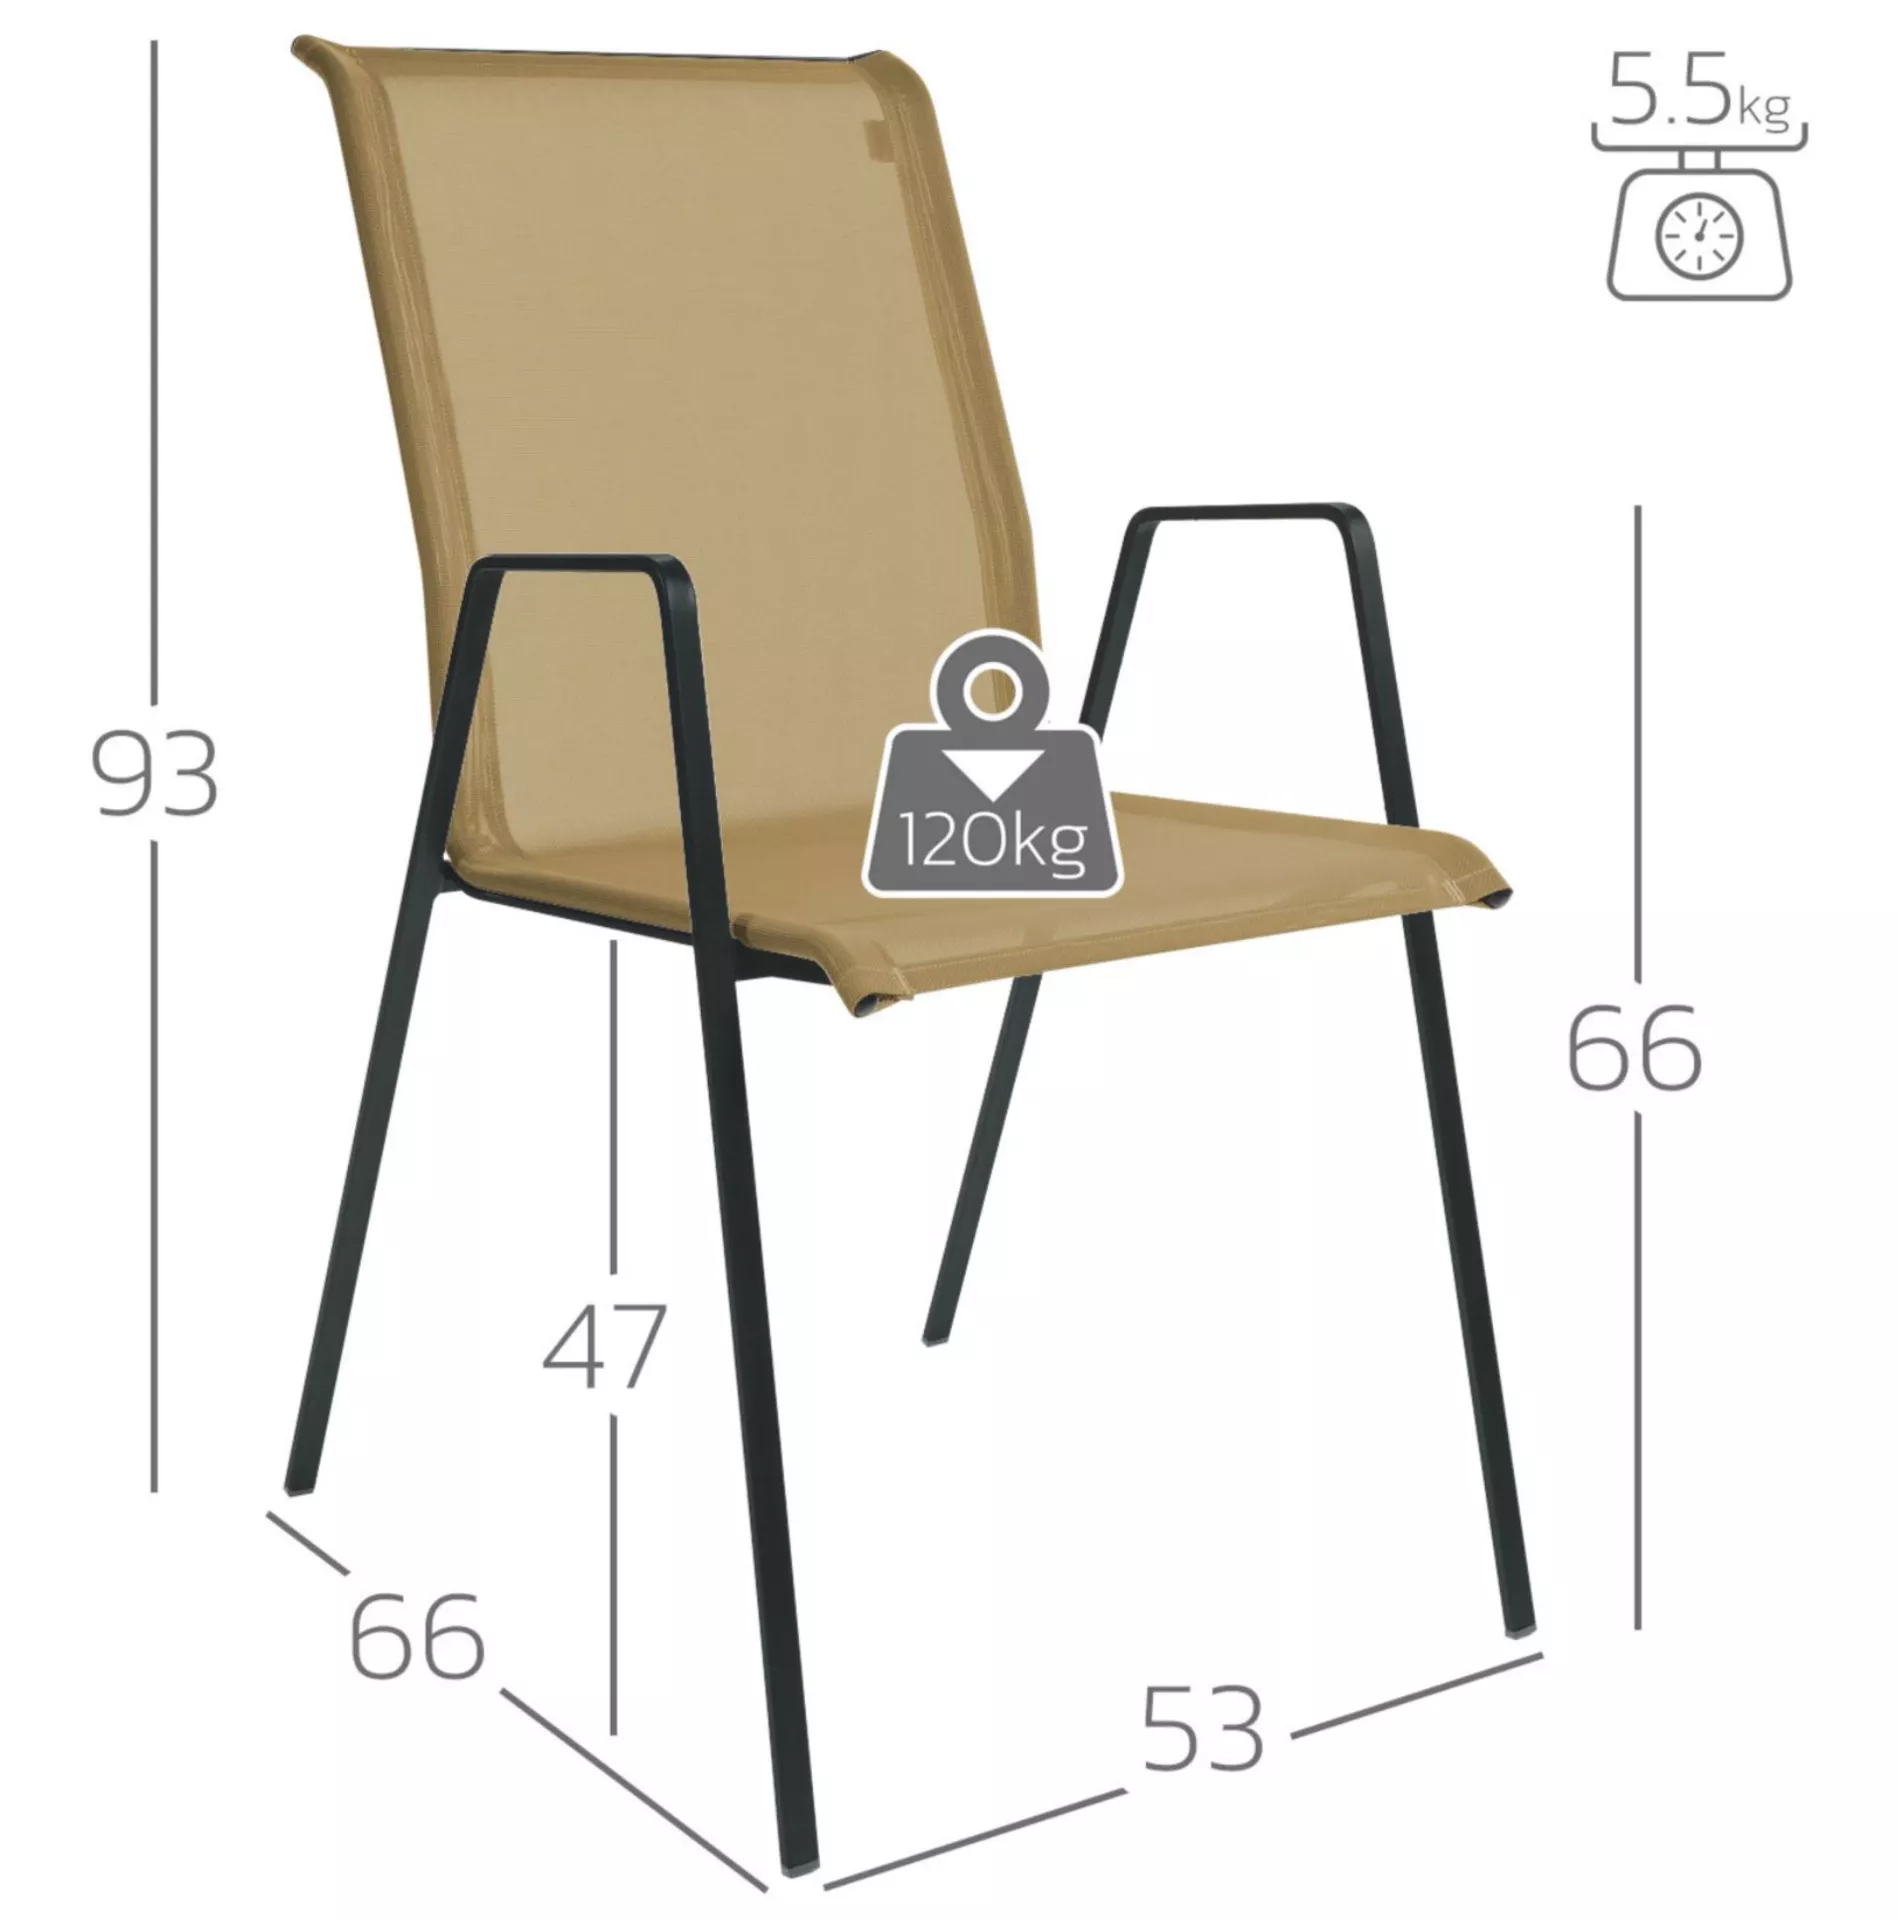 Matten-Sessel Luzern Schaffner / Farbe: Grau